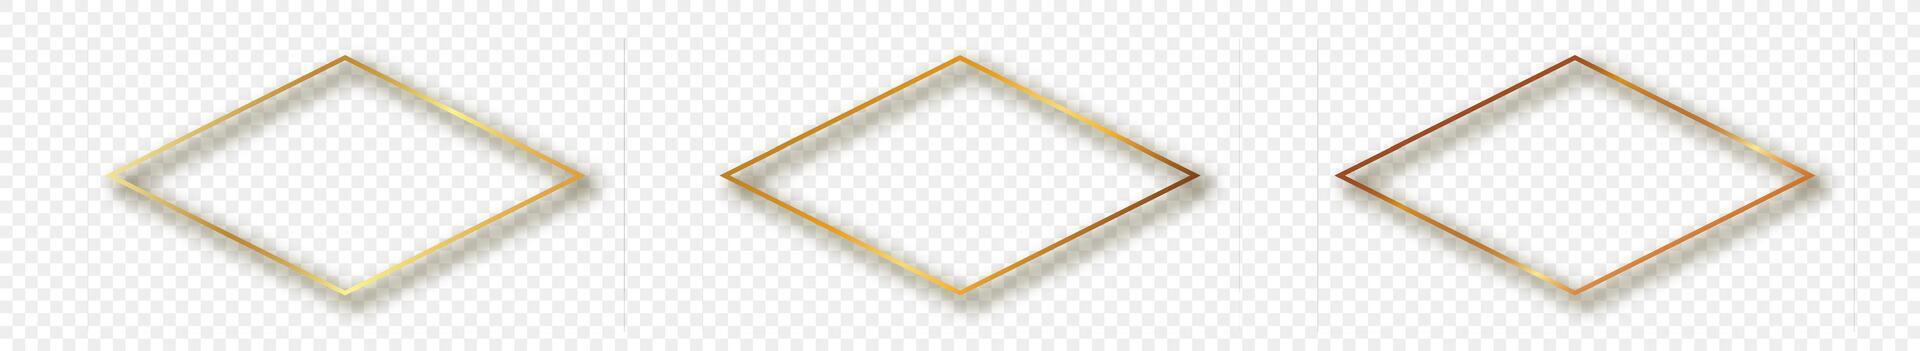 Gold glowing rhombus  shape frame vector